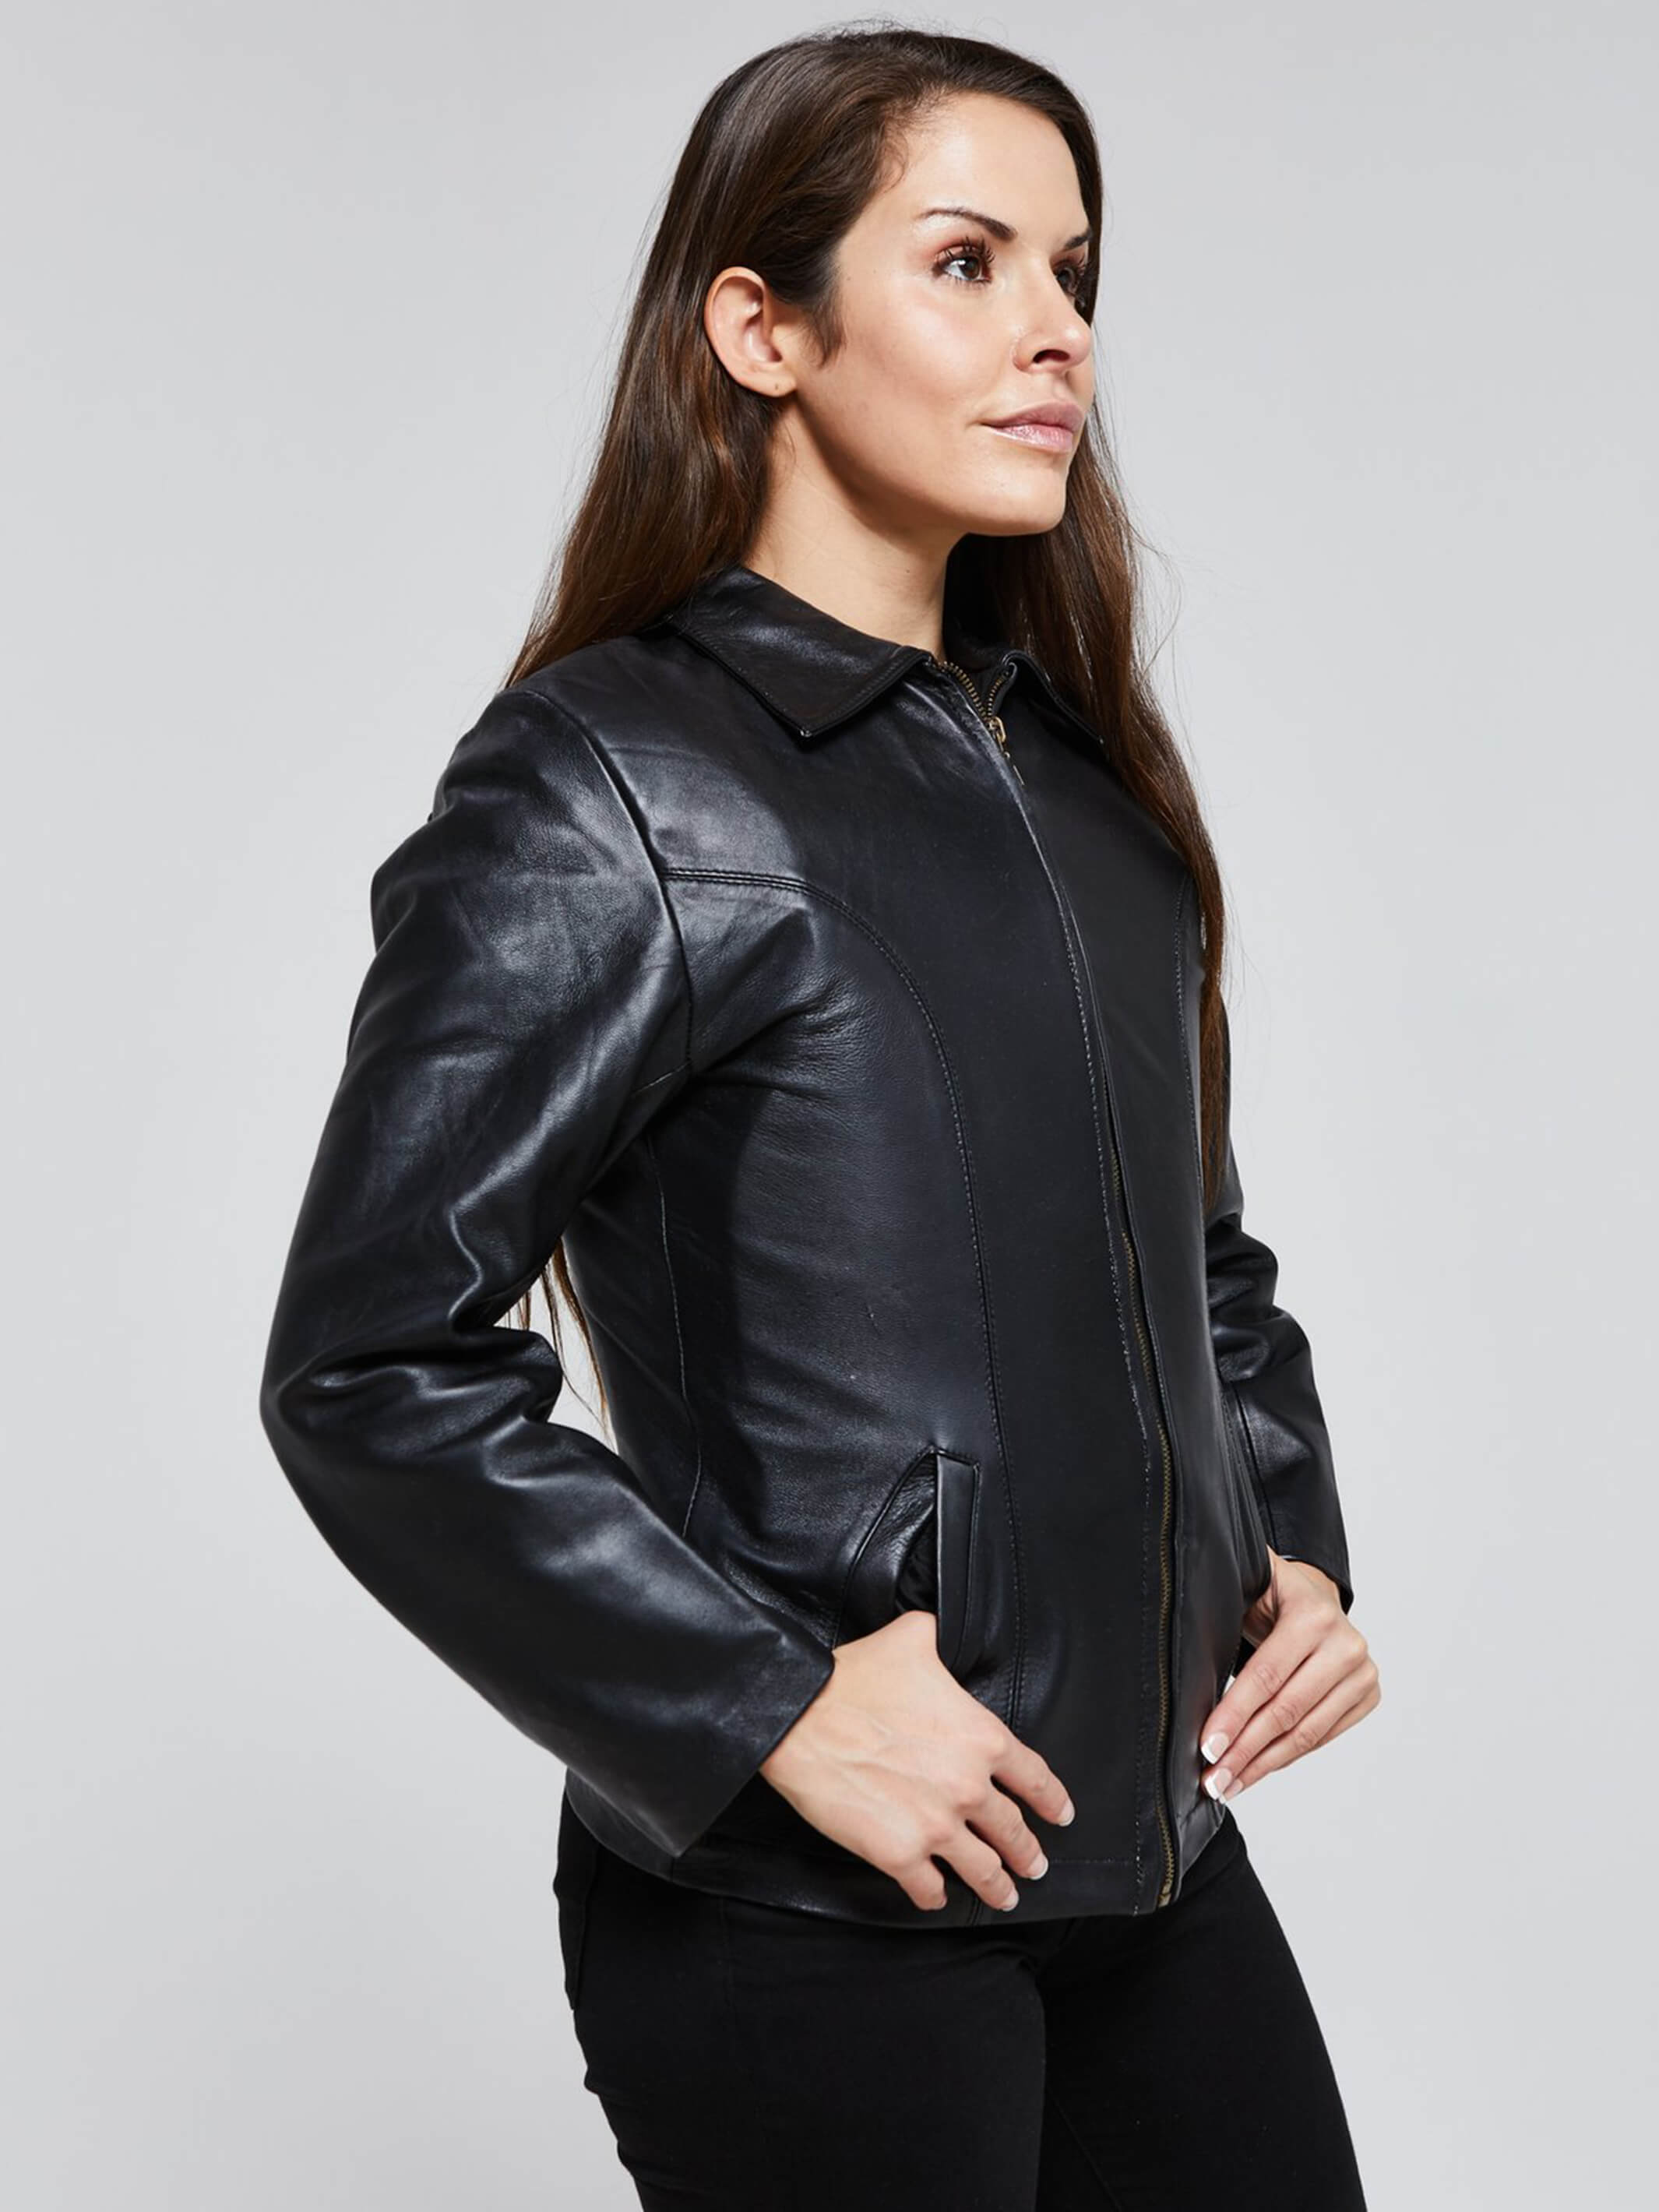 Bullet Resistant Women's Leather Jacket | Innocent Armor